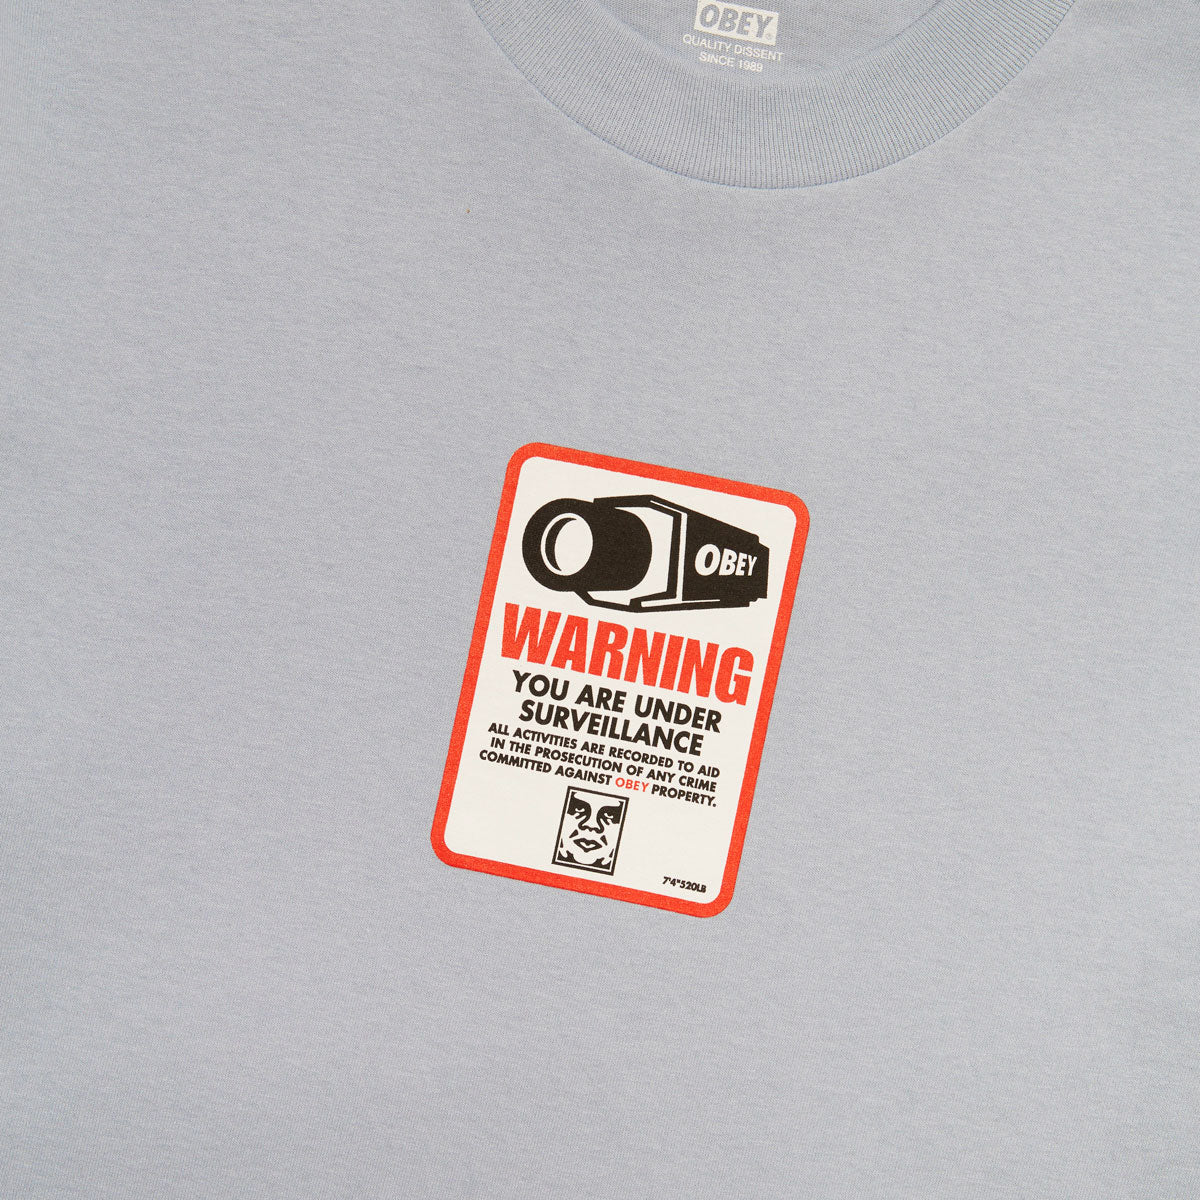 Obey Surveillance T-Shirt - Good Grey image 2